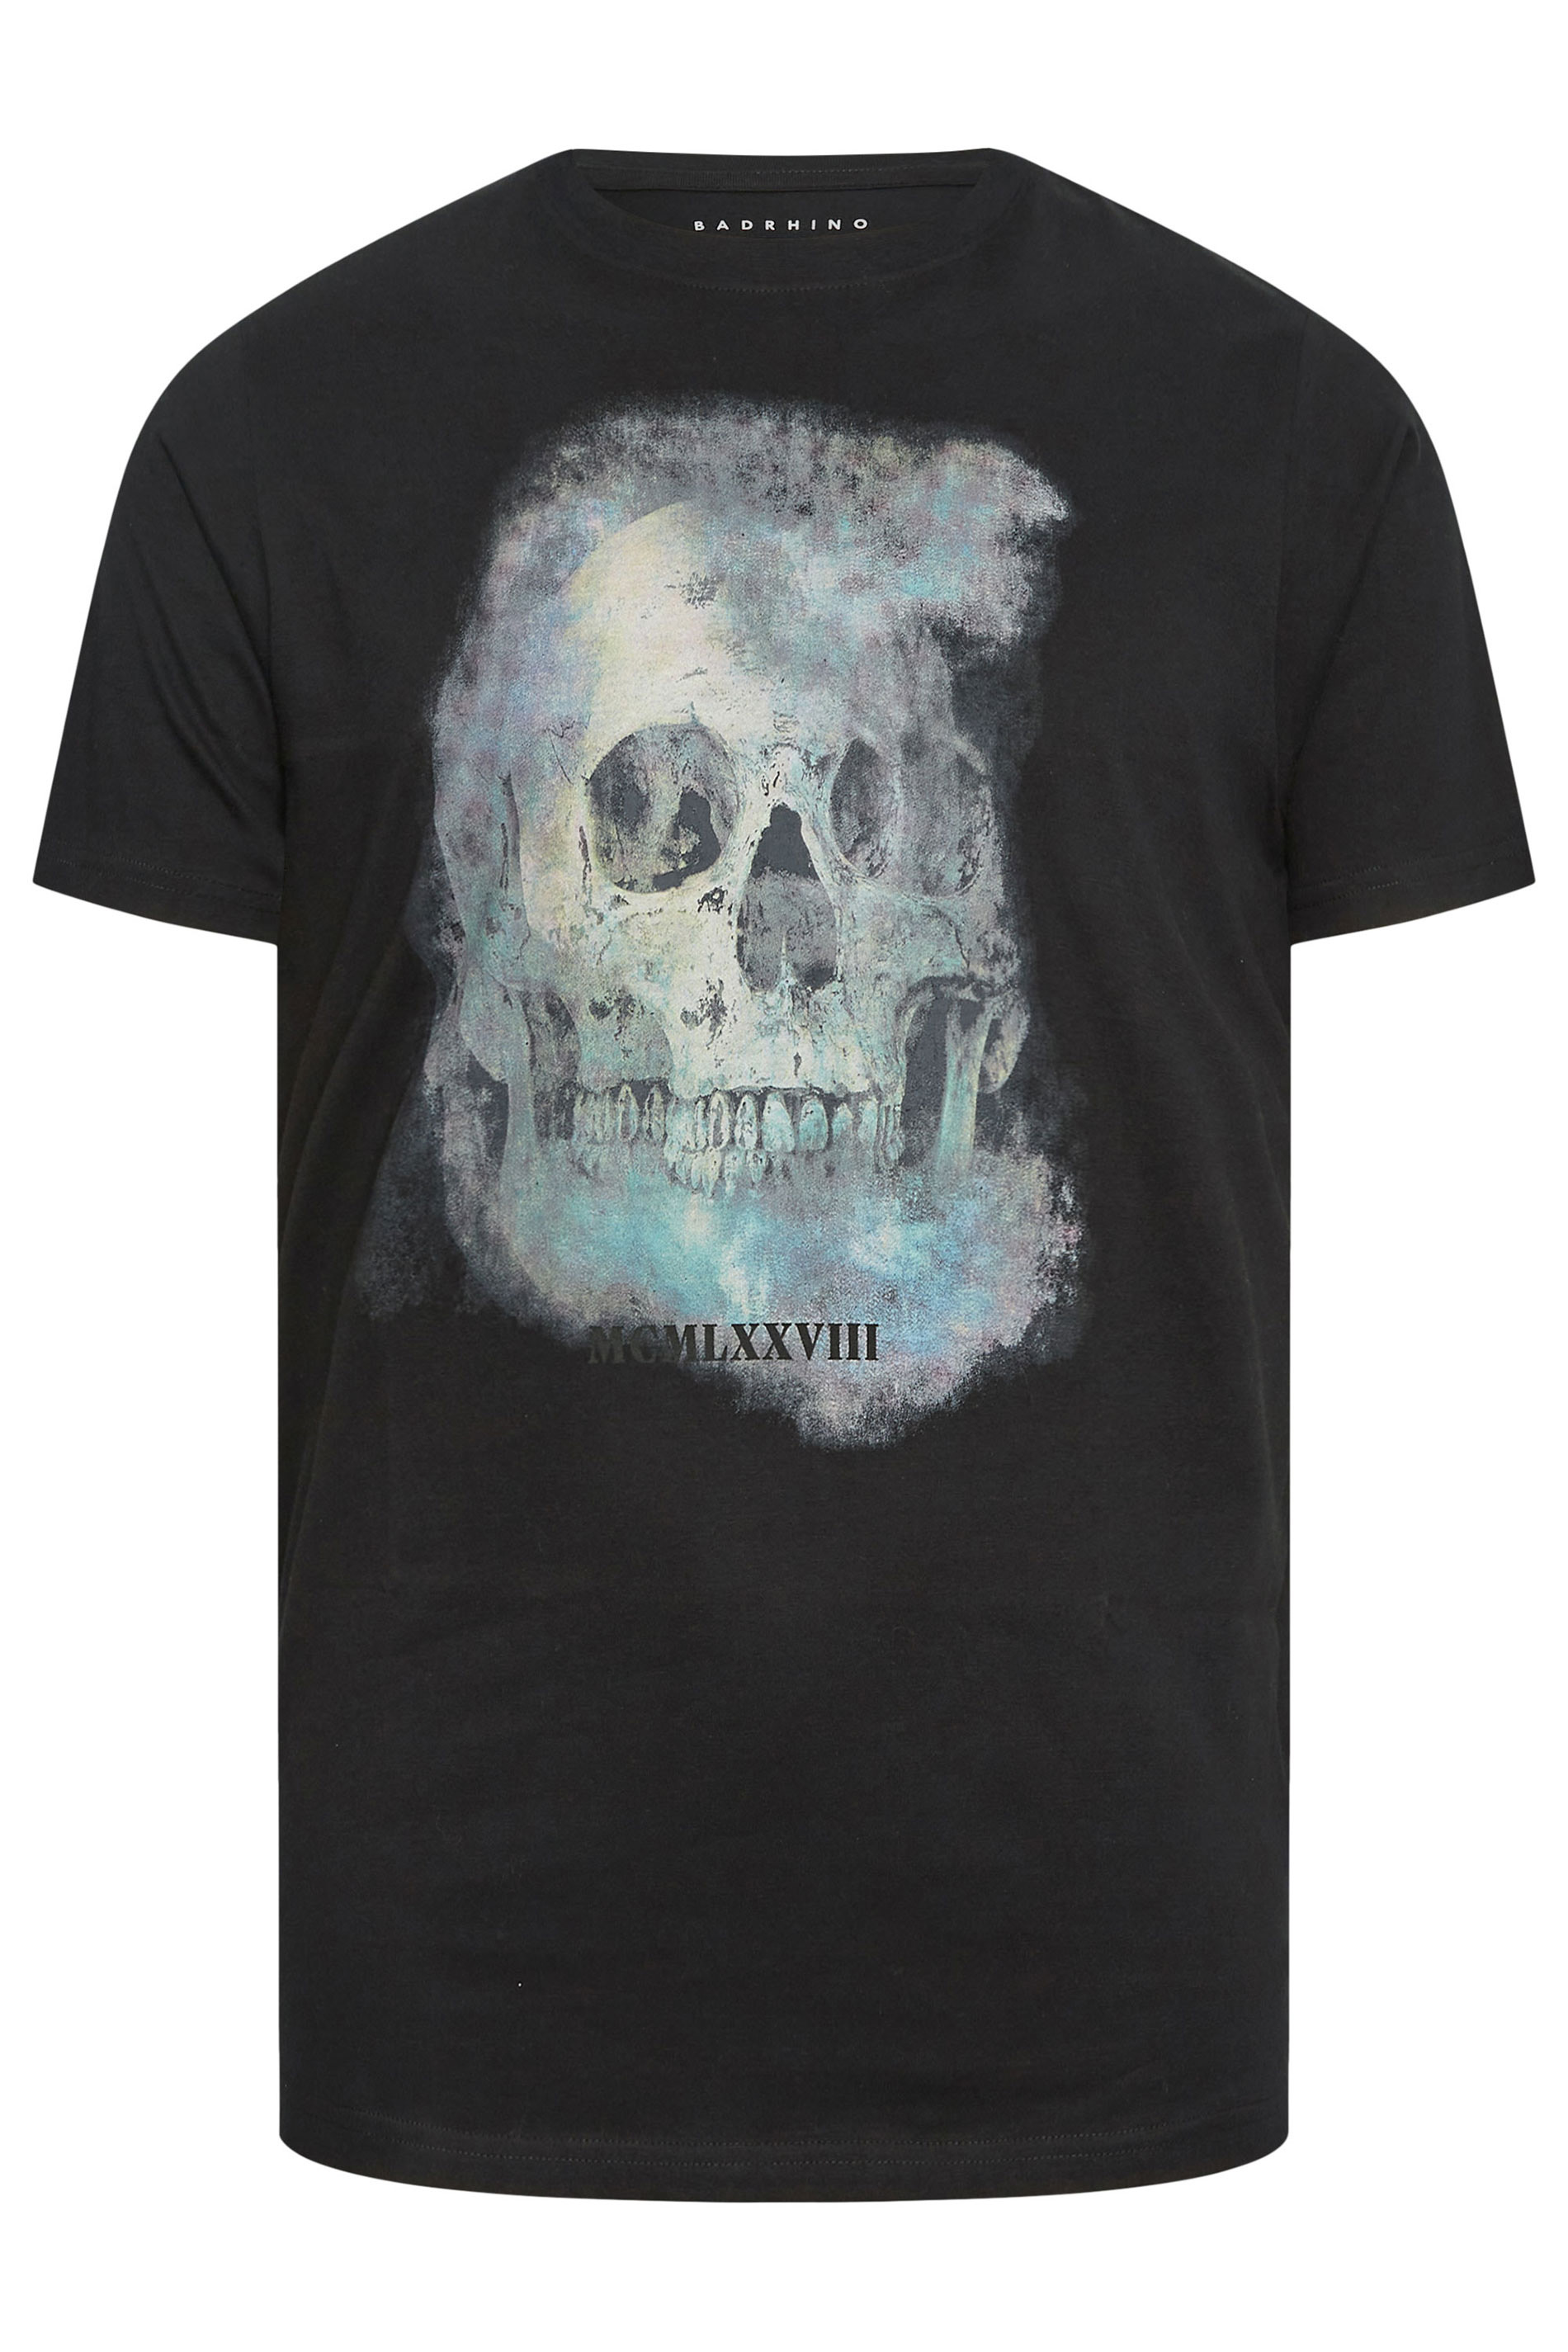 BadRhino Big & Tall Black Blurred Skull Print T-Shirt | BadRhino